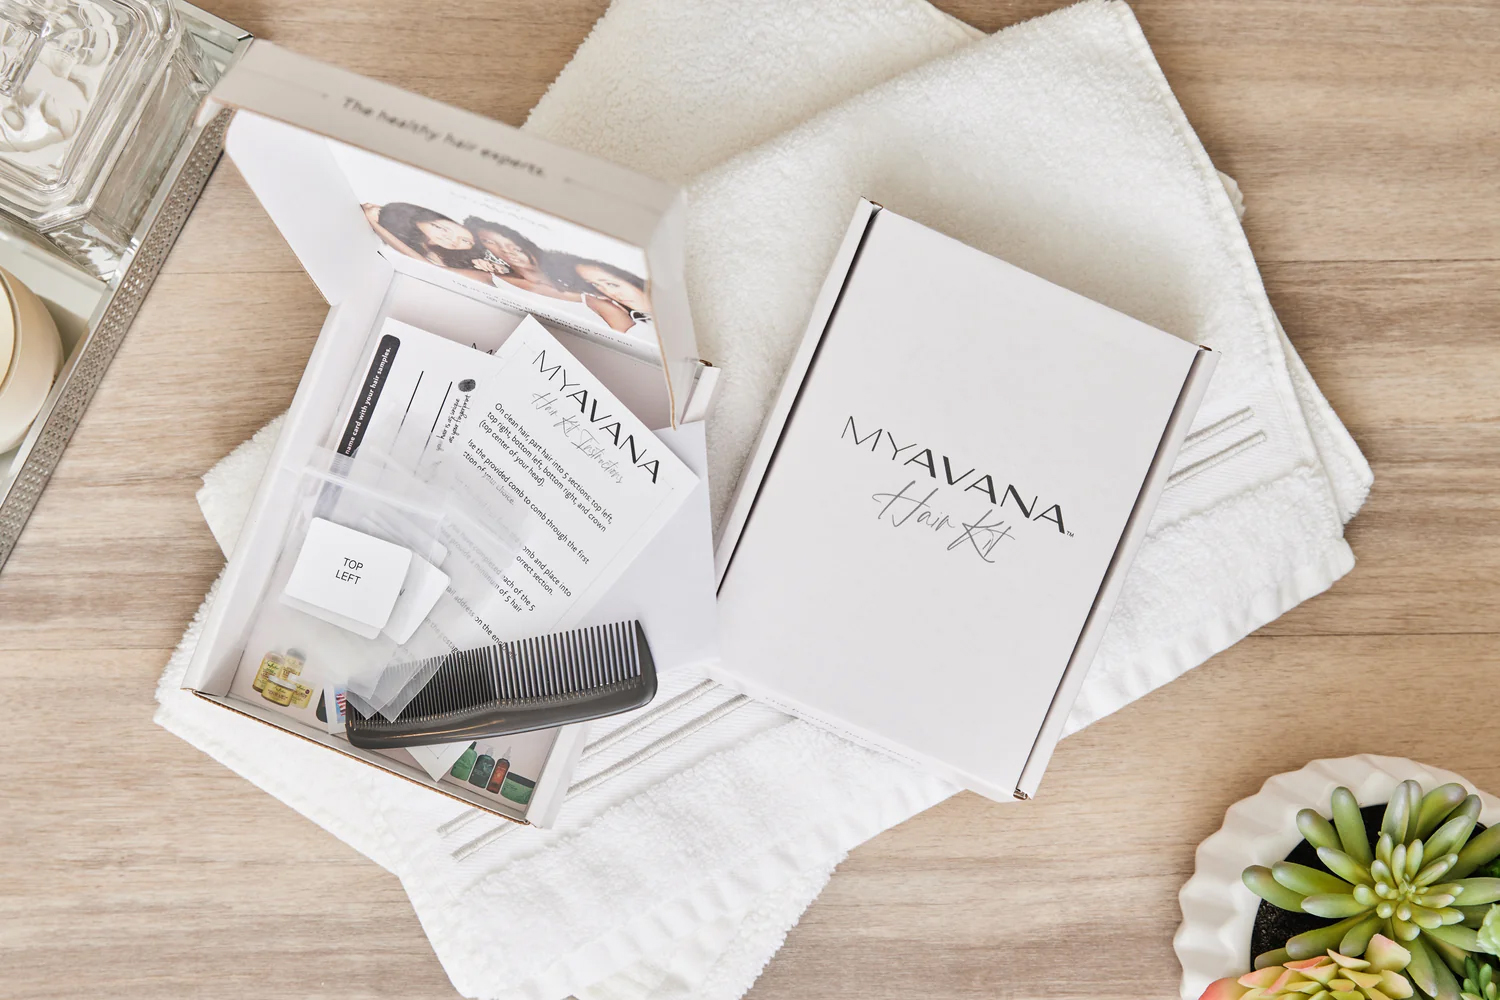 Ulta Beauty Invests in AI Hair Care Company Myavana news article photo of a Myavana hair kit